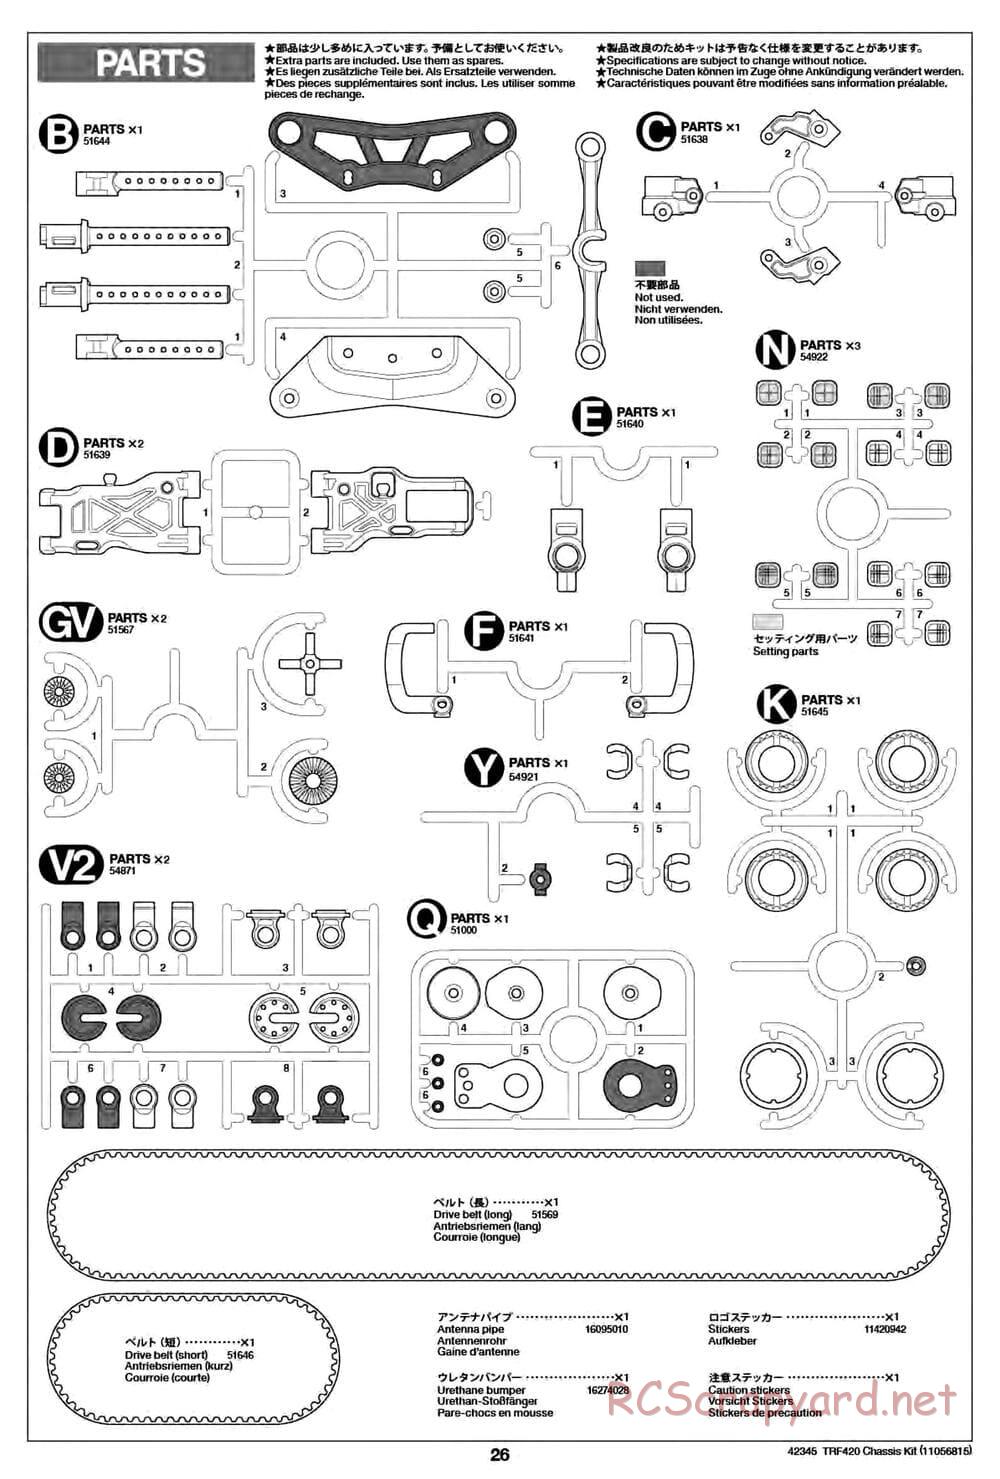 Tamiya - TRF420 Chassis - Manual - Page 26